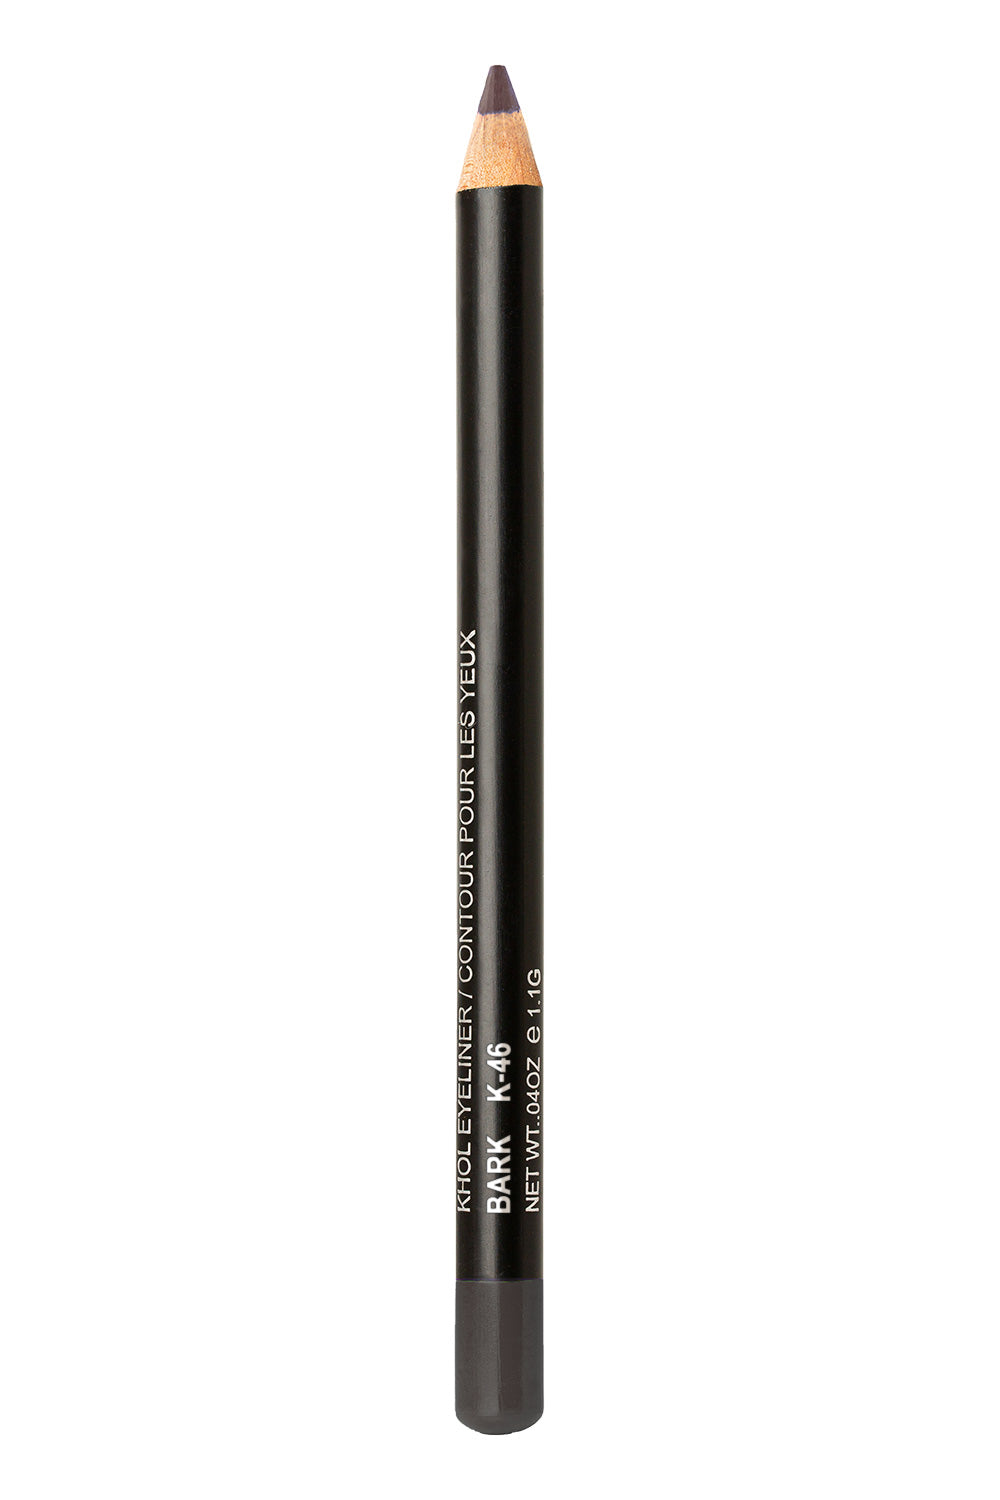 Bark - Type 2 Eyeliner Pencil